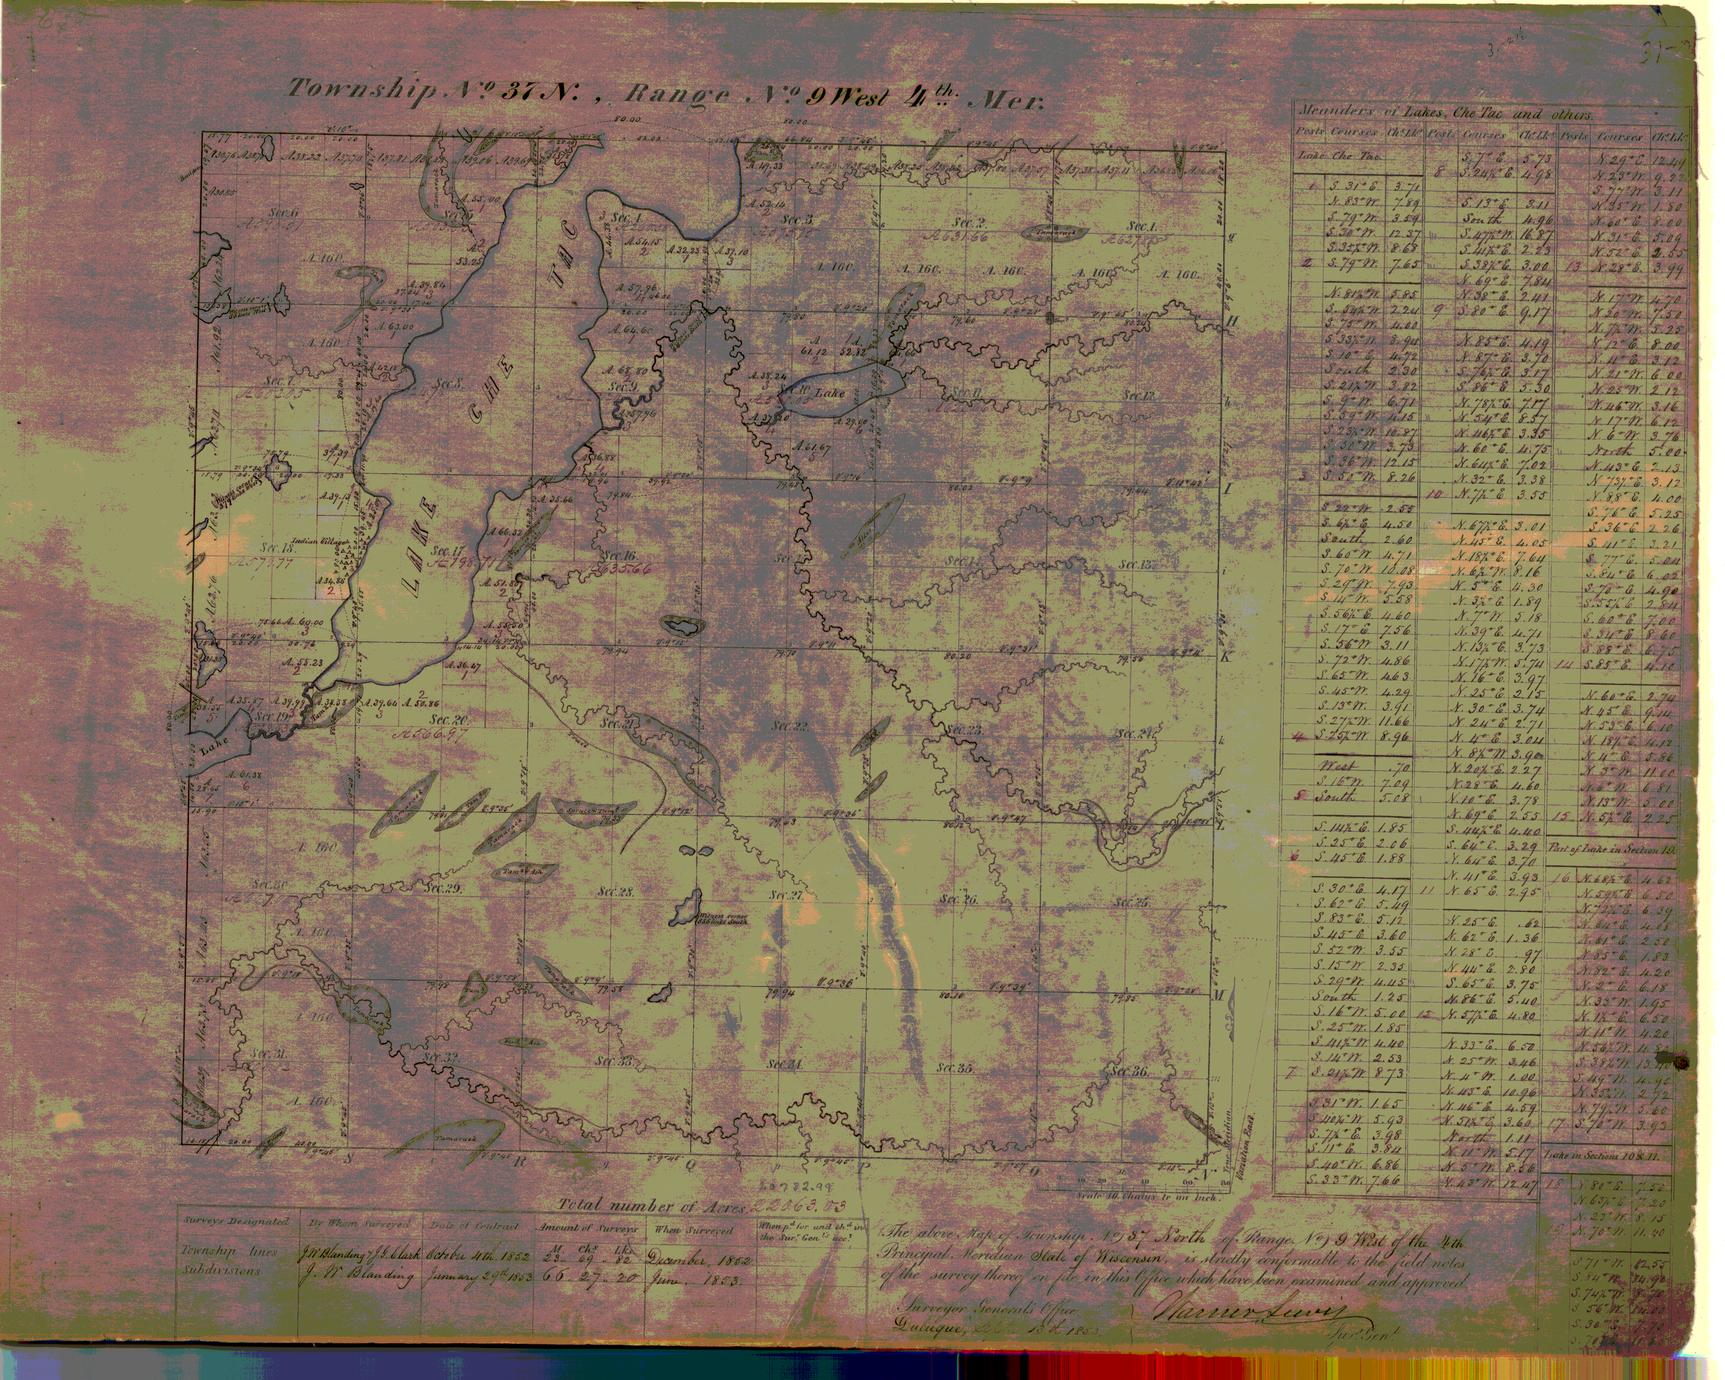 [Public Land Survey System map: Wisconsin Township 37 North, Range 09 West]